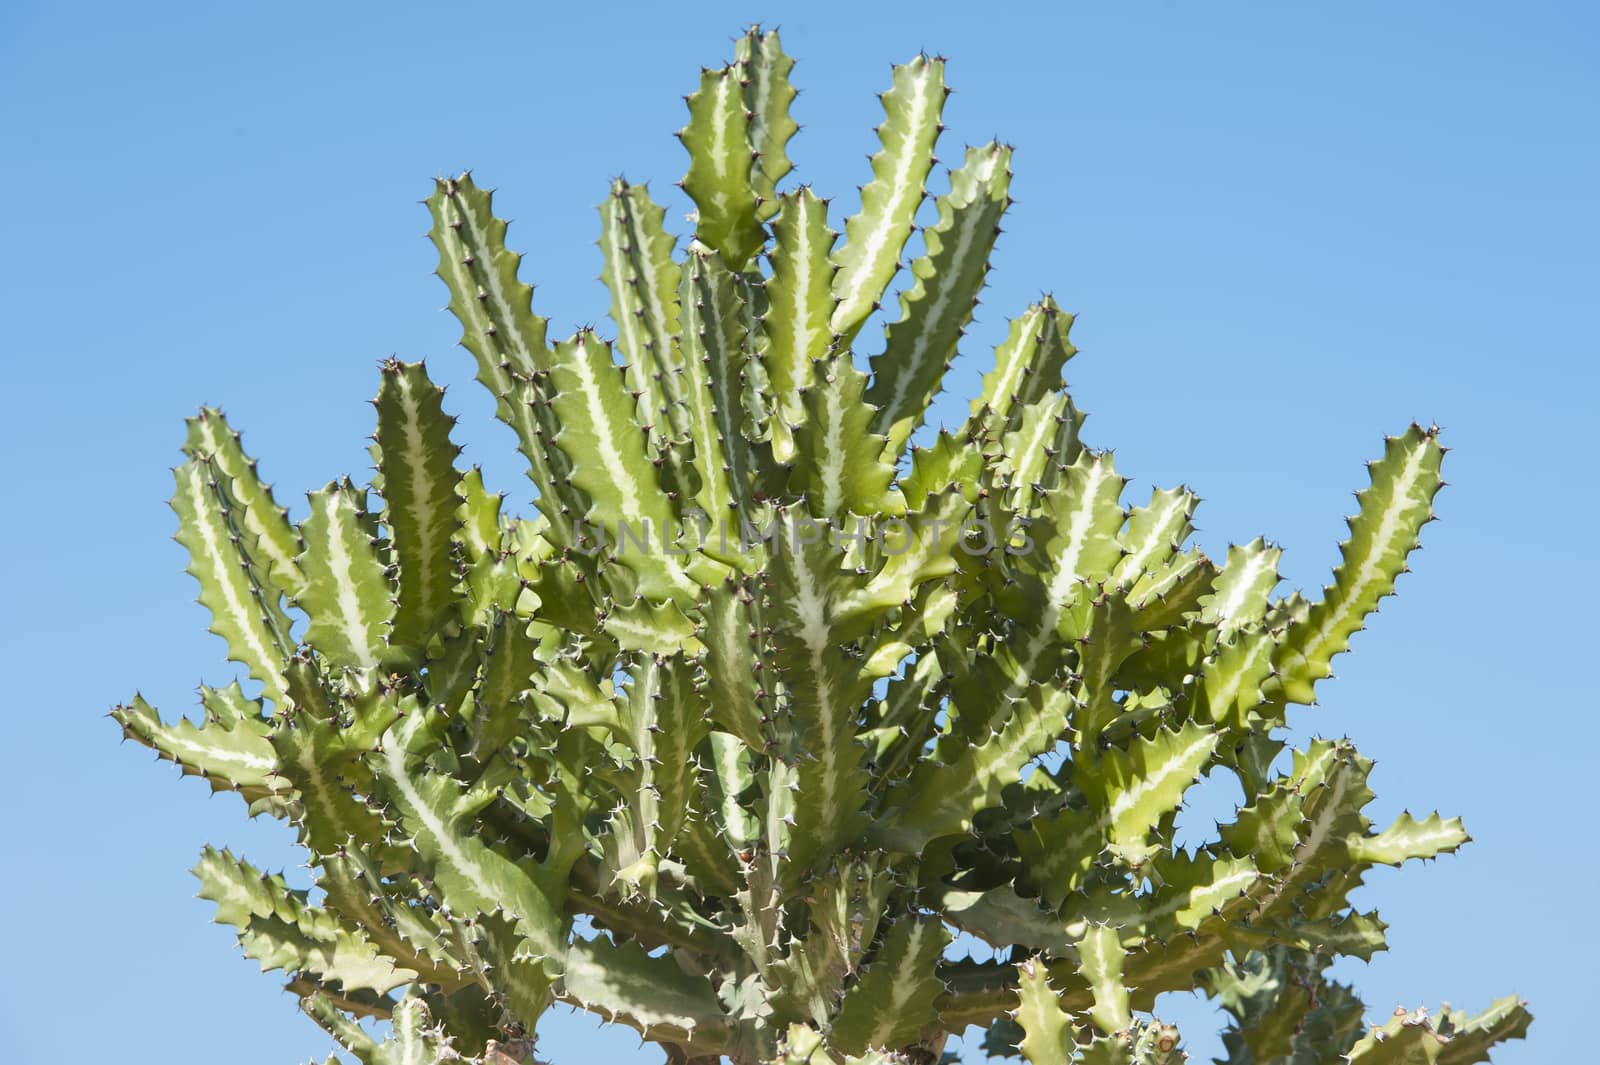 Large cactus plant against a blue sky background